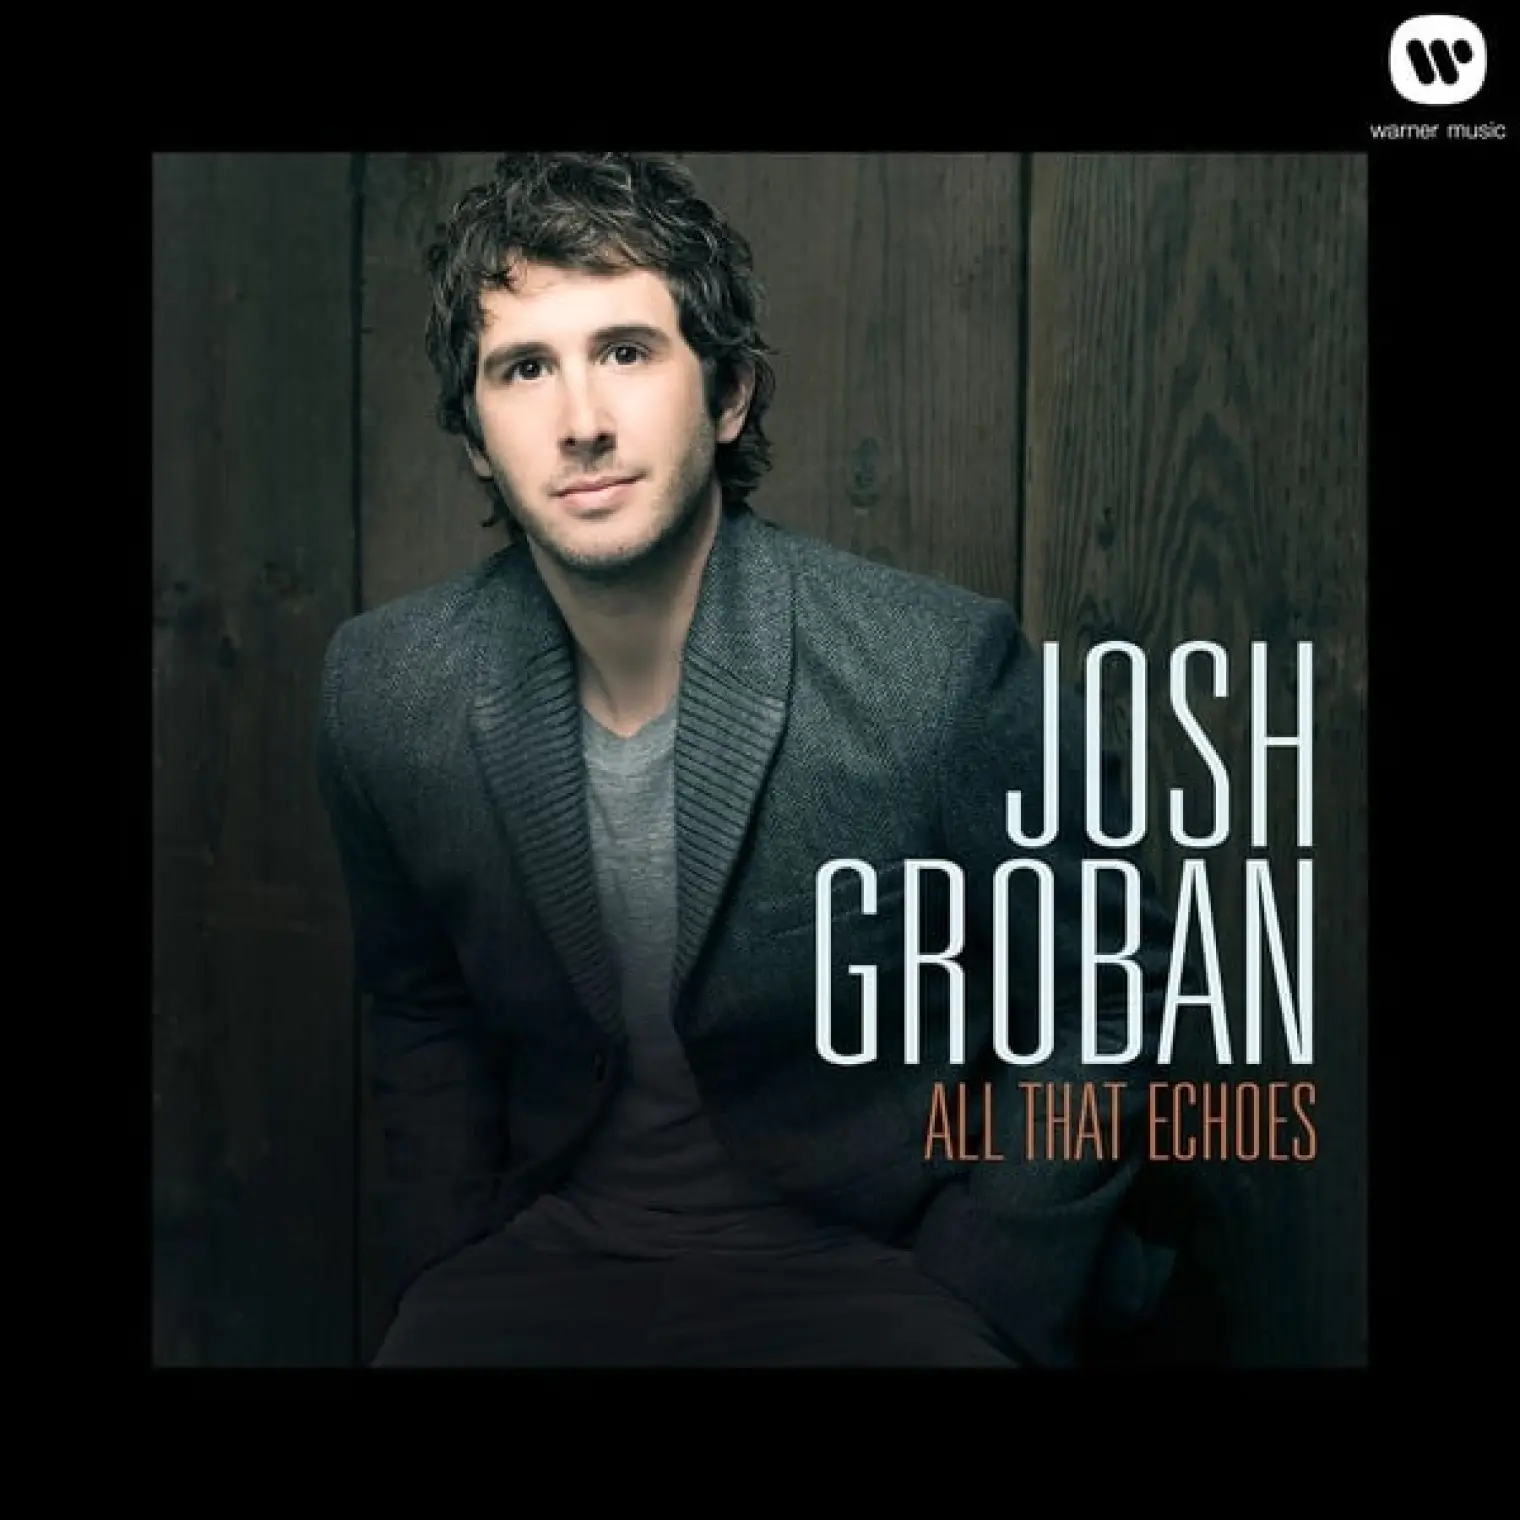 All That Echoes -  Josh Groban 